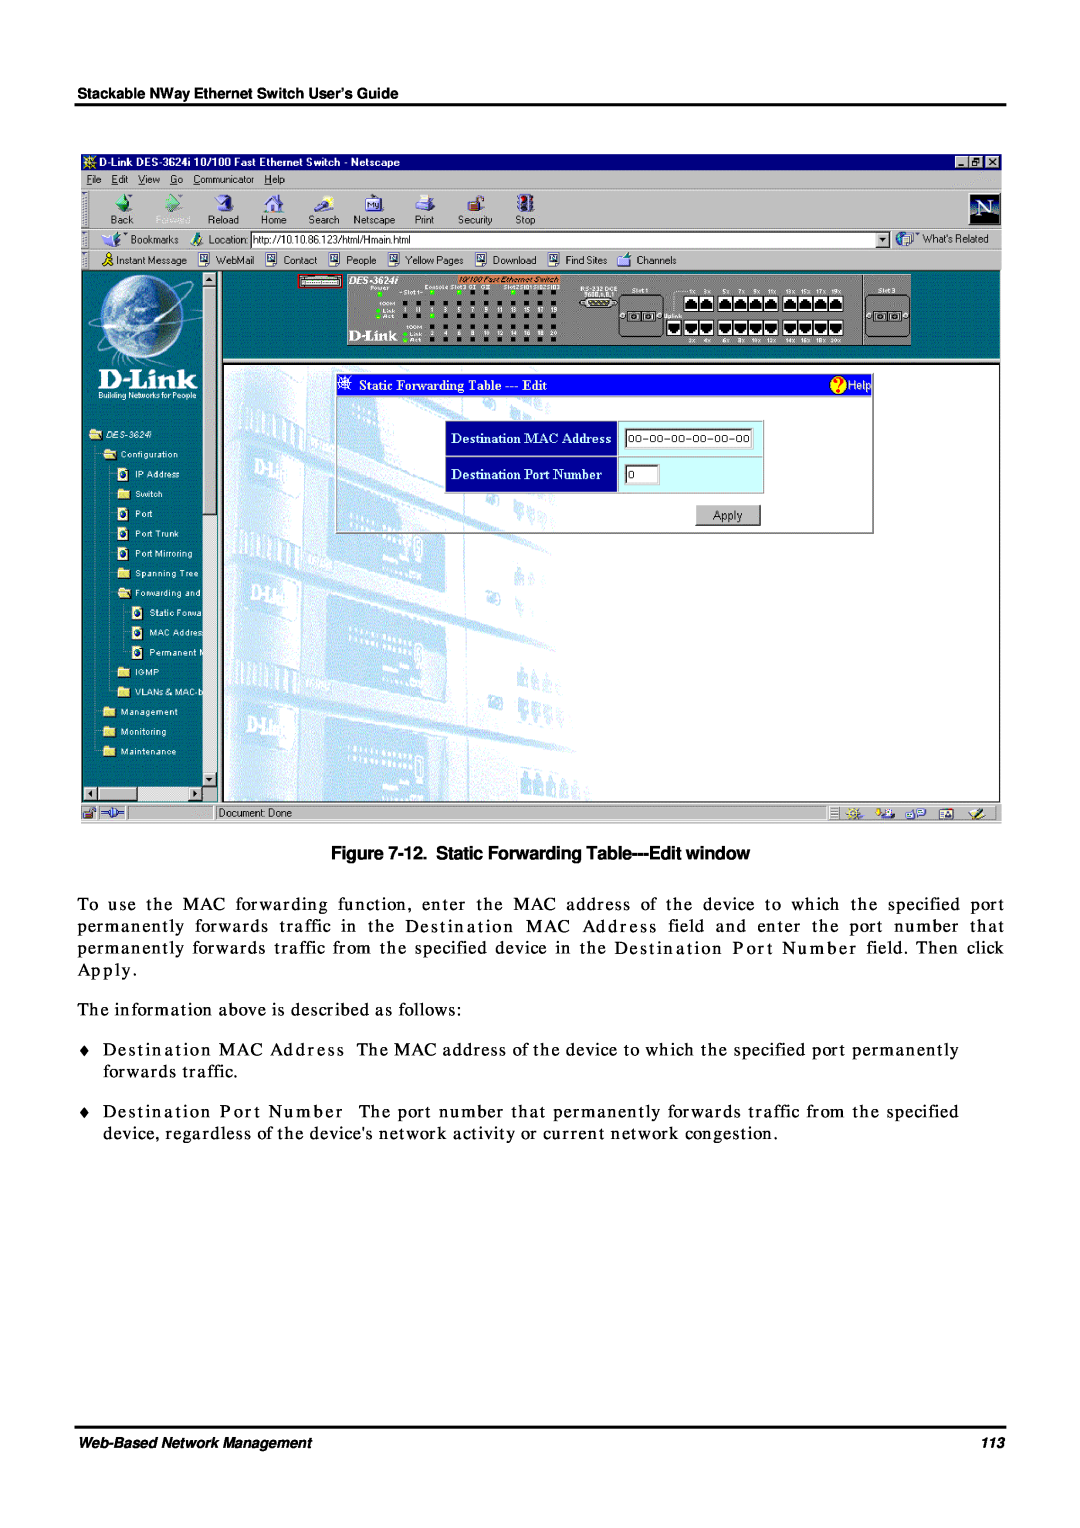 D-Link DES-3624 manual 12. Static Forwarding Table---Edit window 